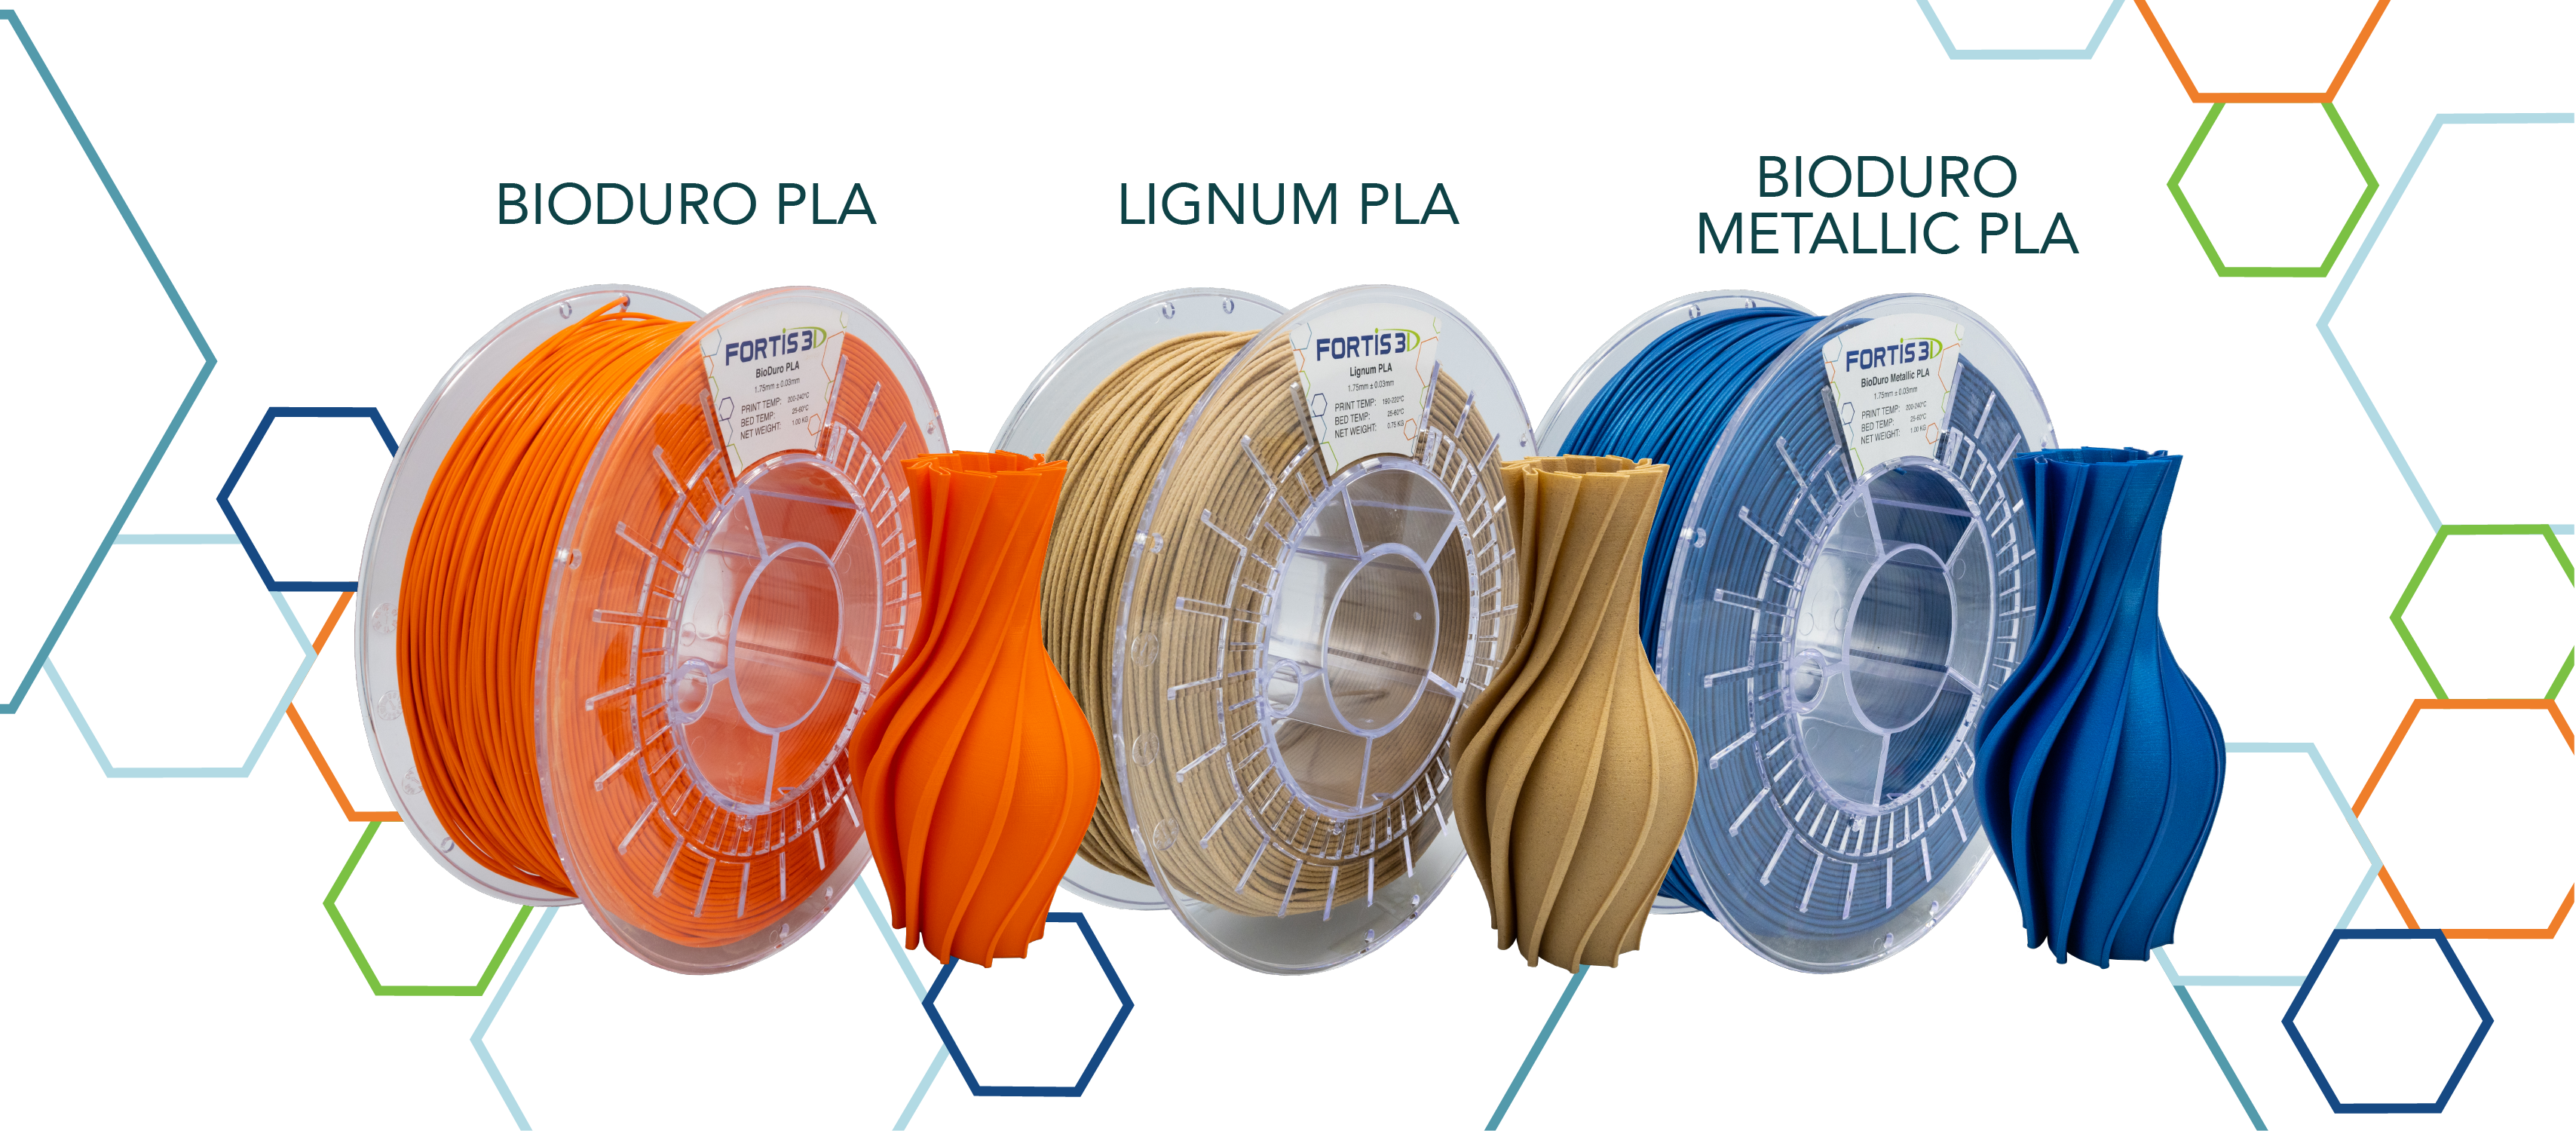 BioDuro PLA, Lignum PLA and BioDuro Metallic PLA filaments from Fortis3D.  Image via Fortis3D.